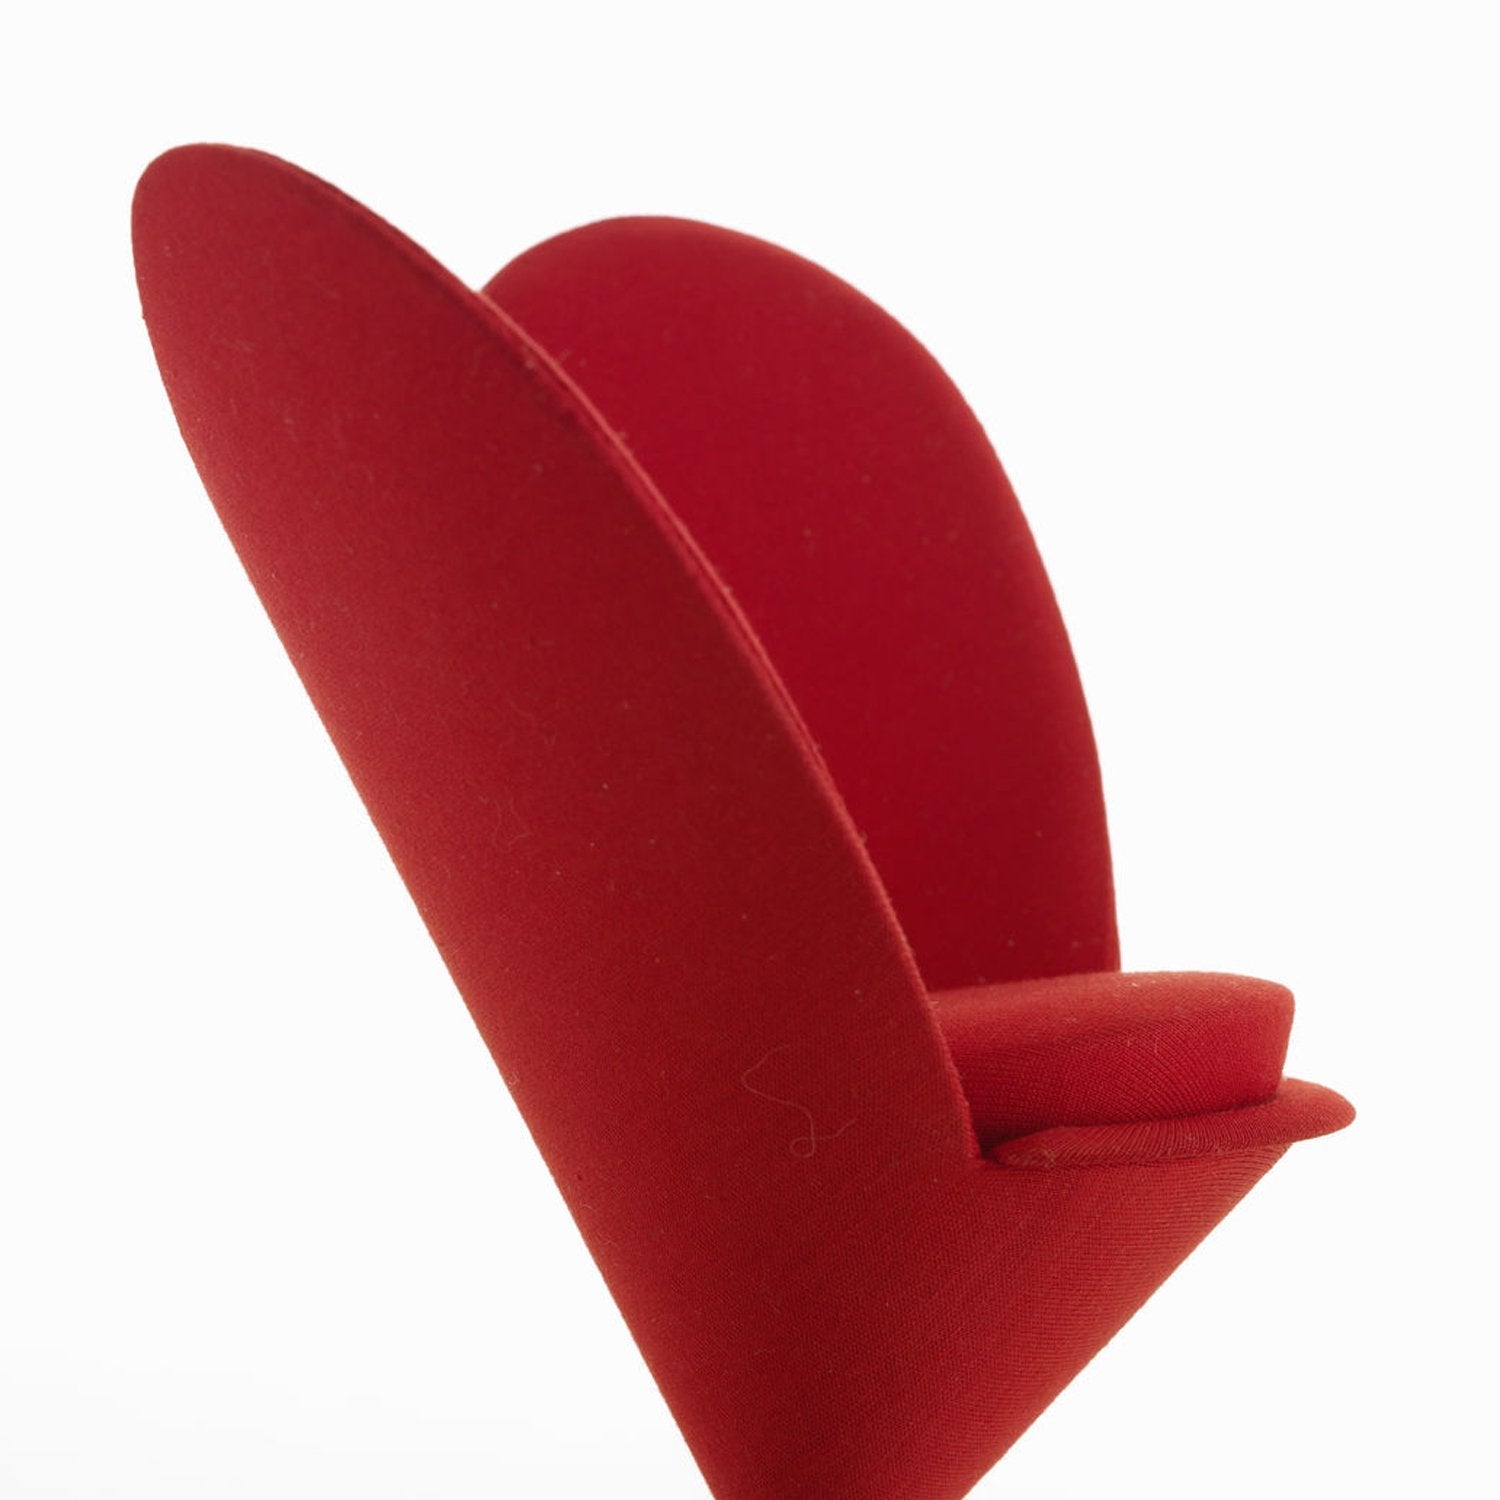 Miniatur Heart-Shaped Cone Chair - Vitra Design Museum Shop